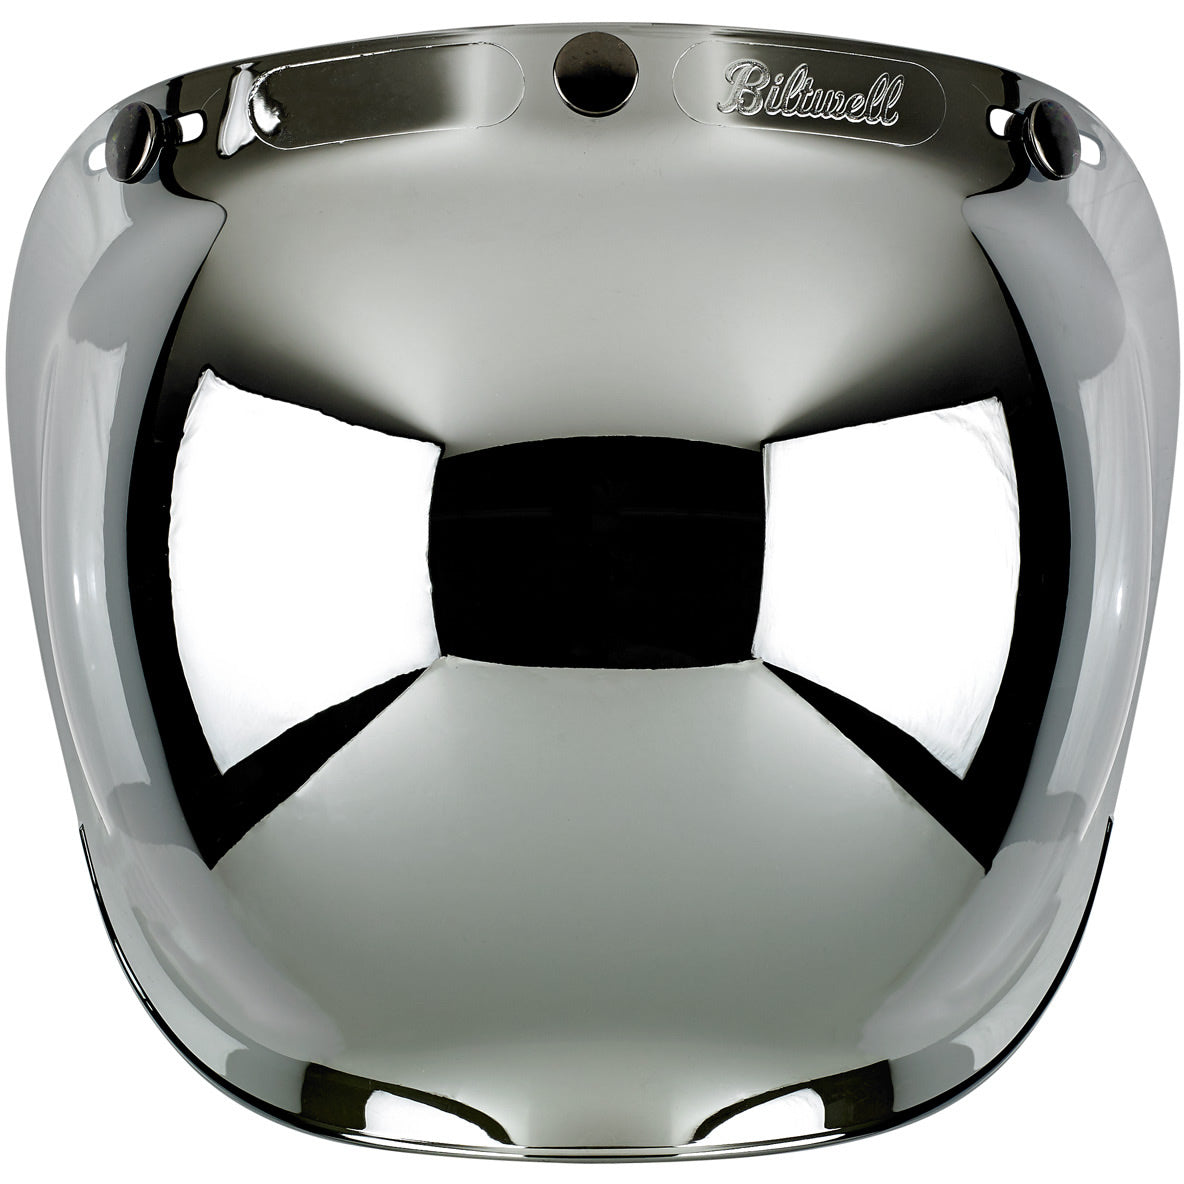 Bubble Shield Anti-Fog - Chrome Mirror